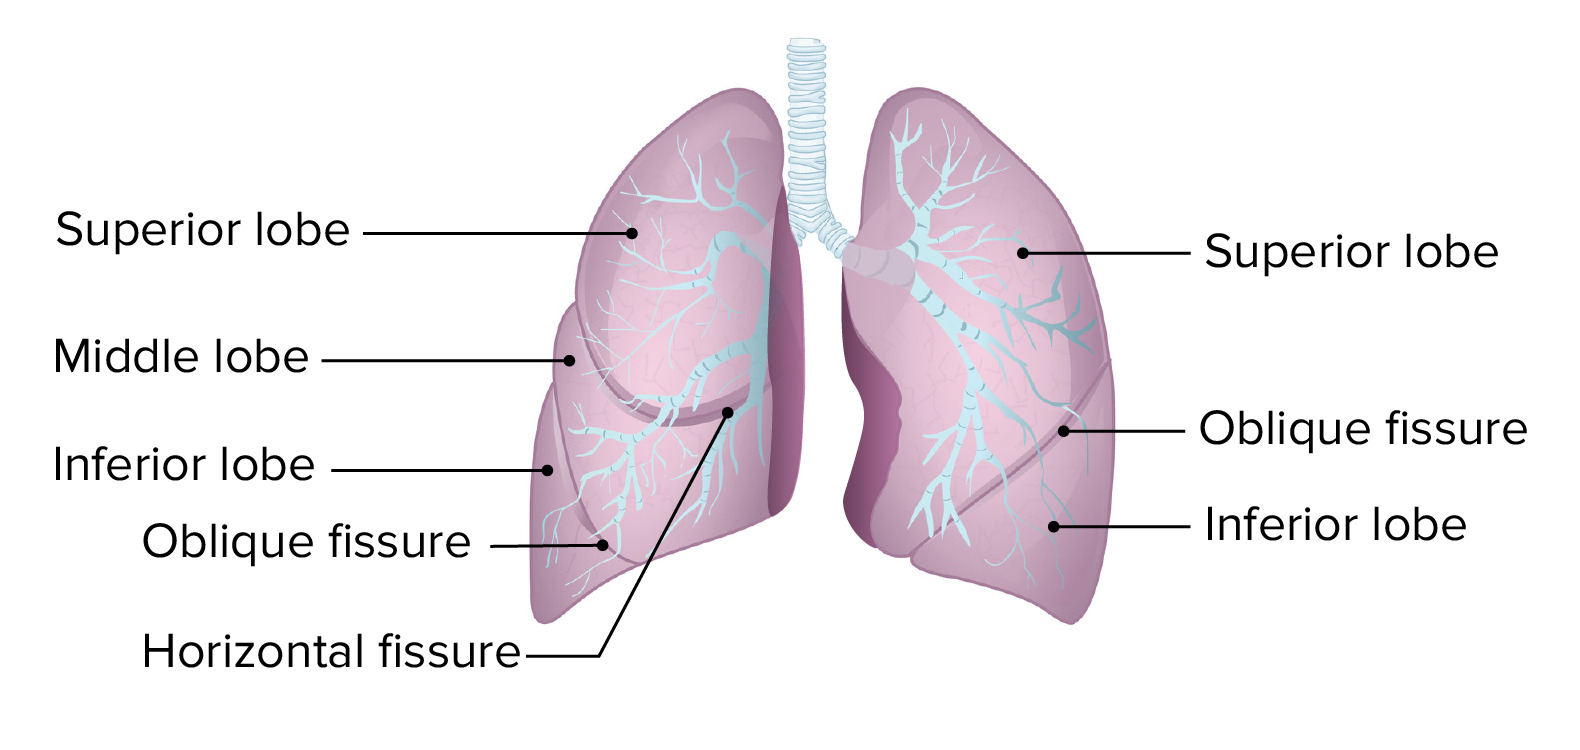 Human Lungs Anatomy